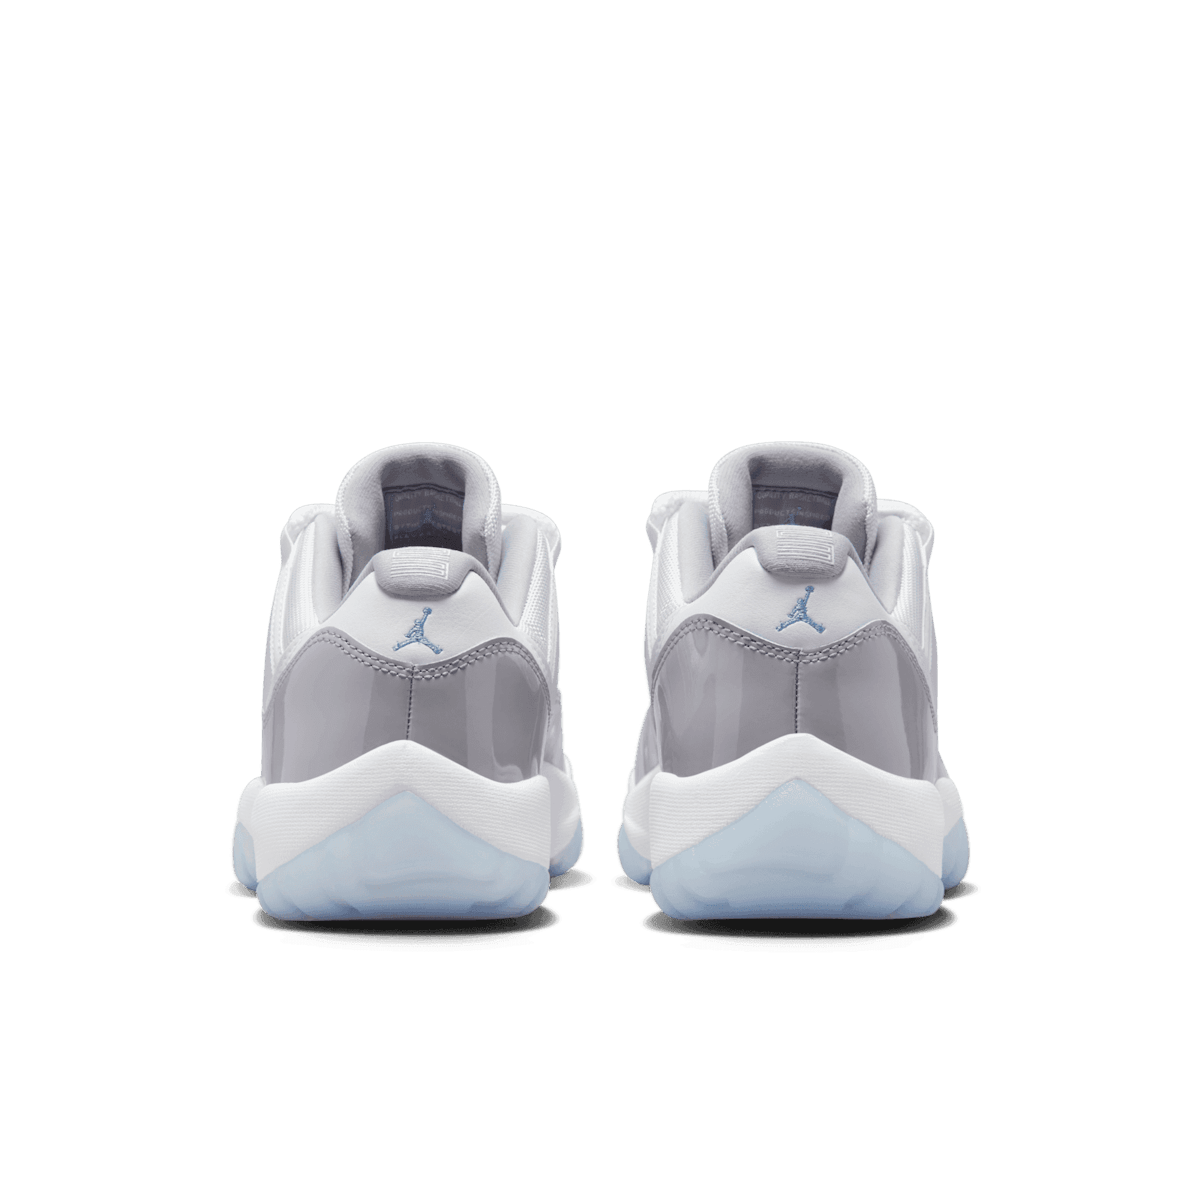 Air Jordan 11 Low Cement Grey Angle 3